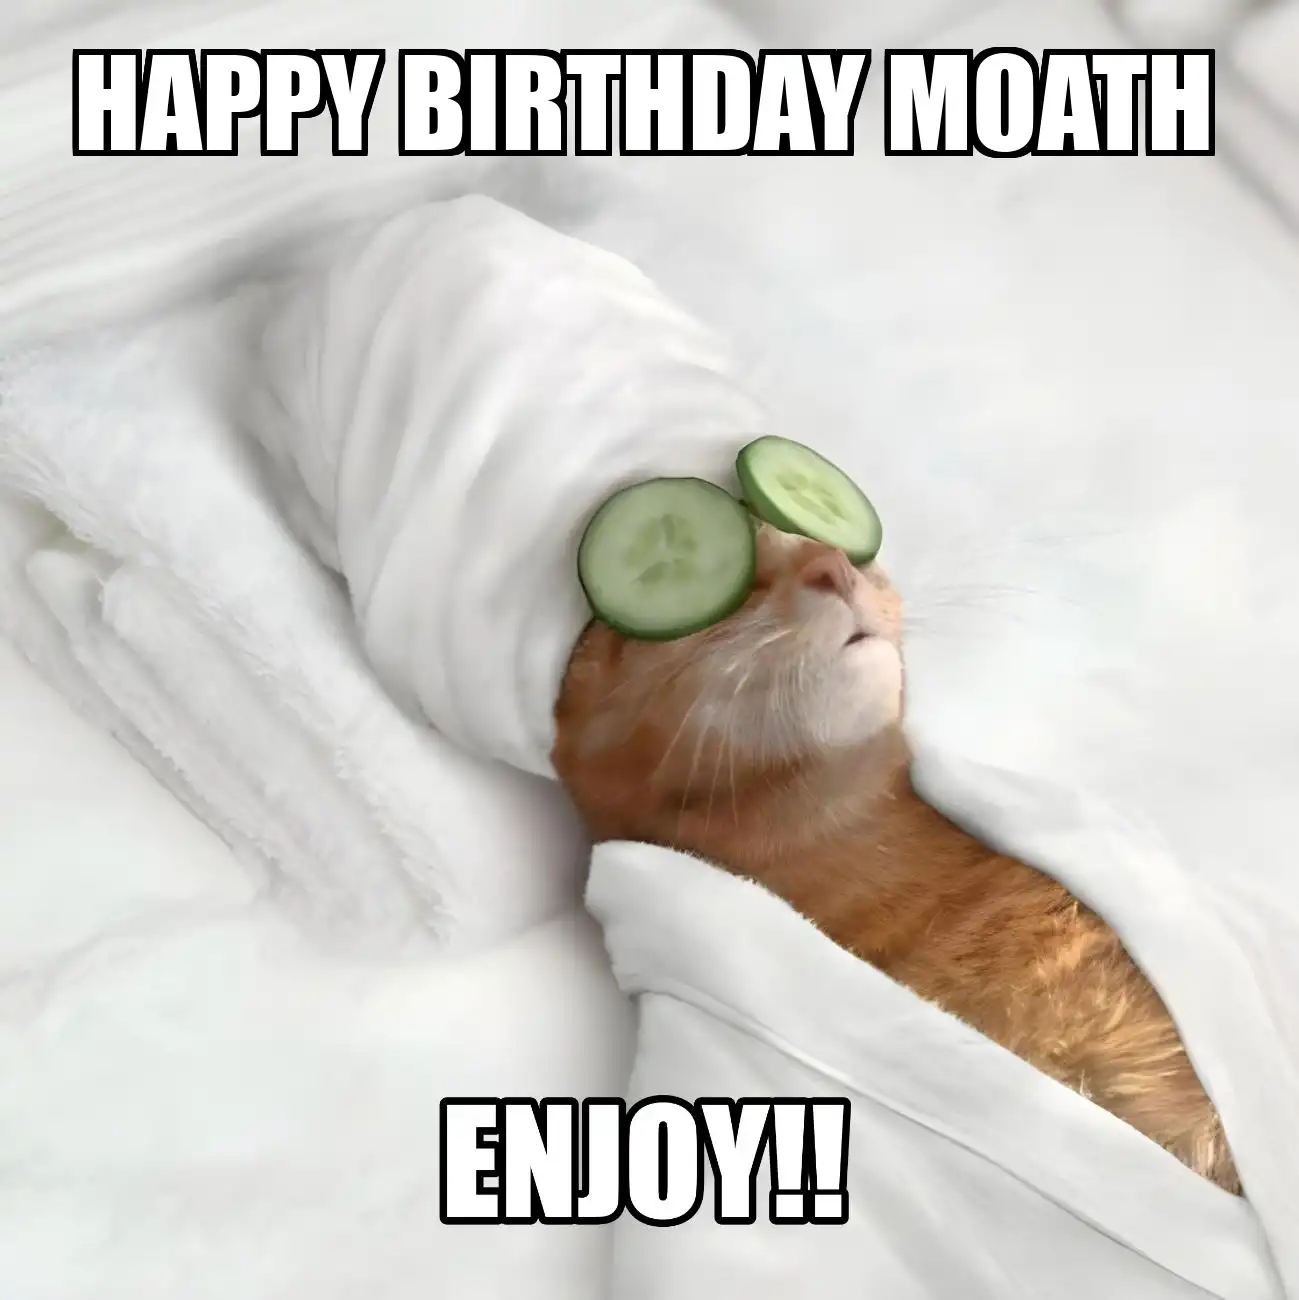 Happy Birthday Moath Enjoy Cat Meme